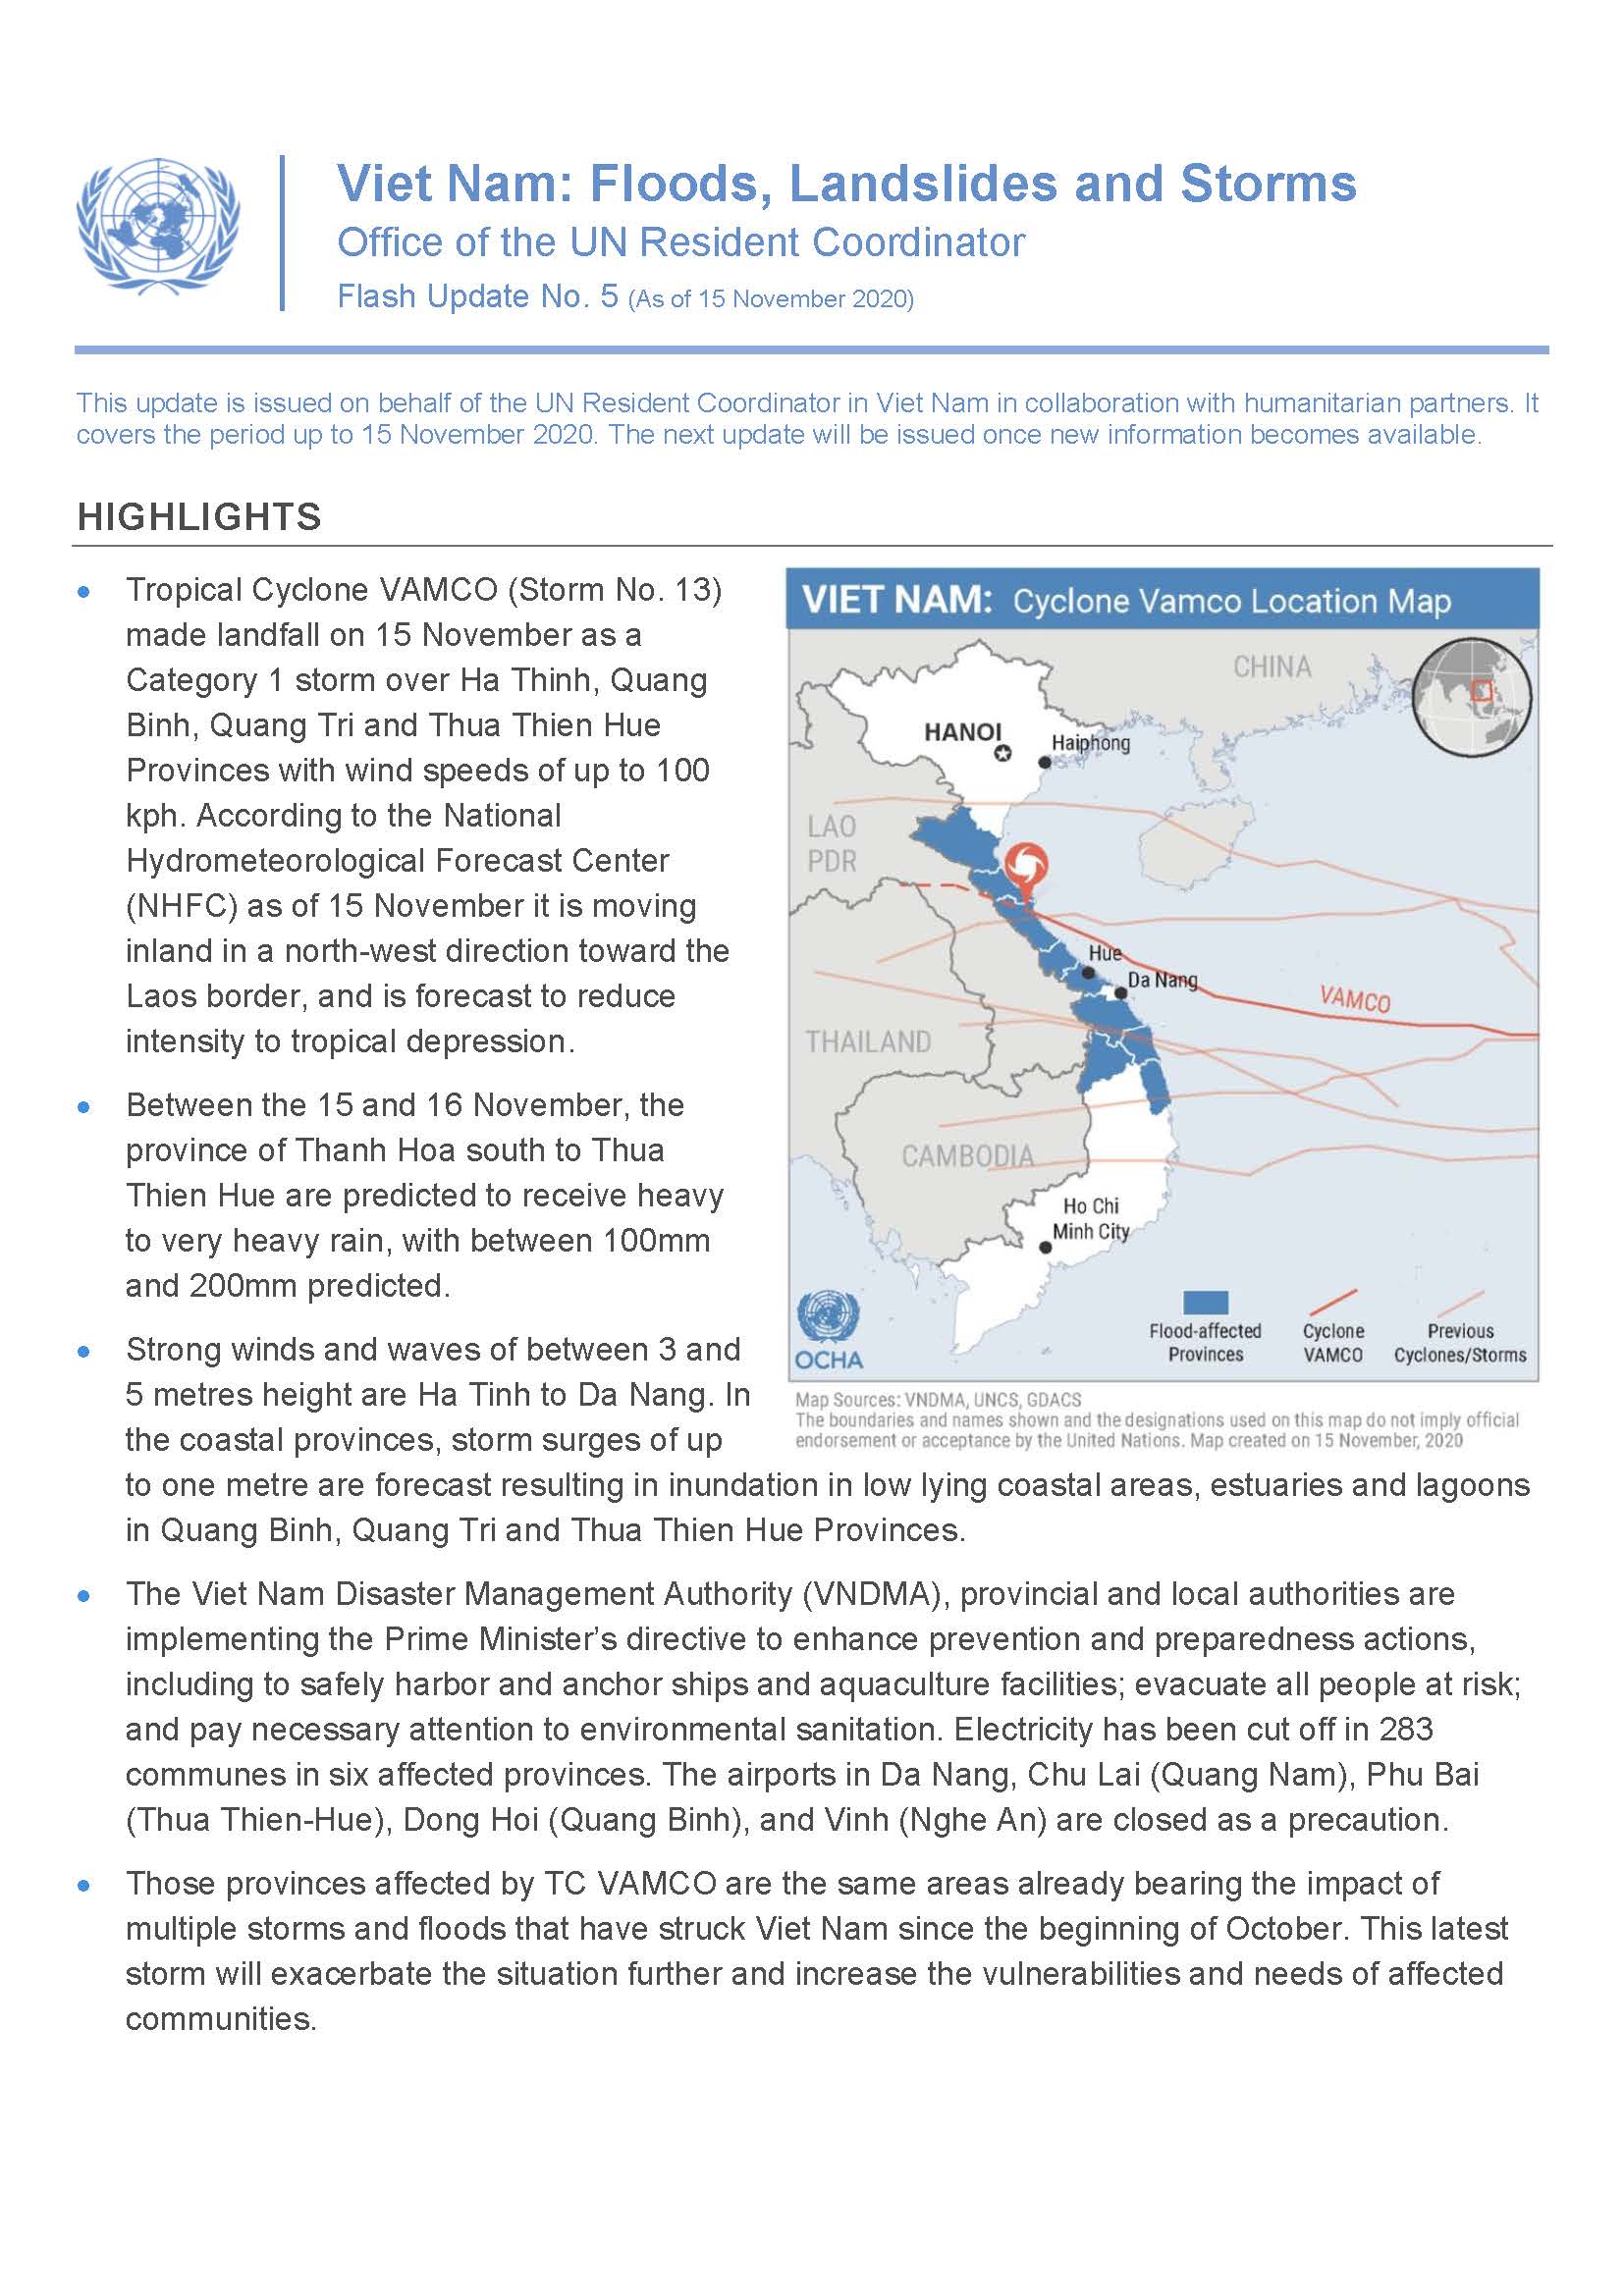 Viet Nam: Floods, Landslides and Storms Flash Update No. 5 (As of 15 November 2020)